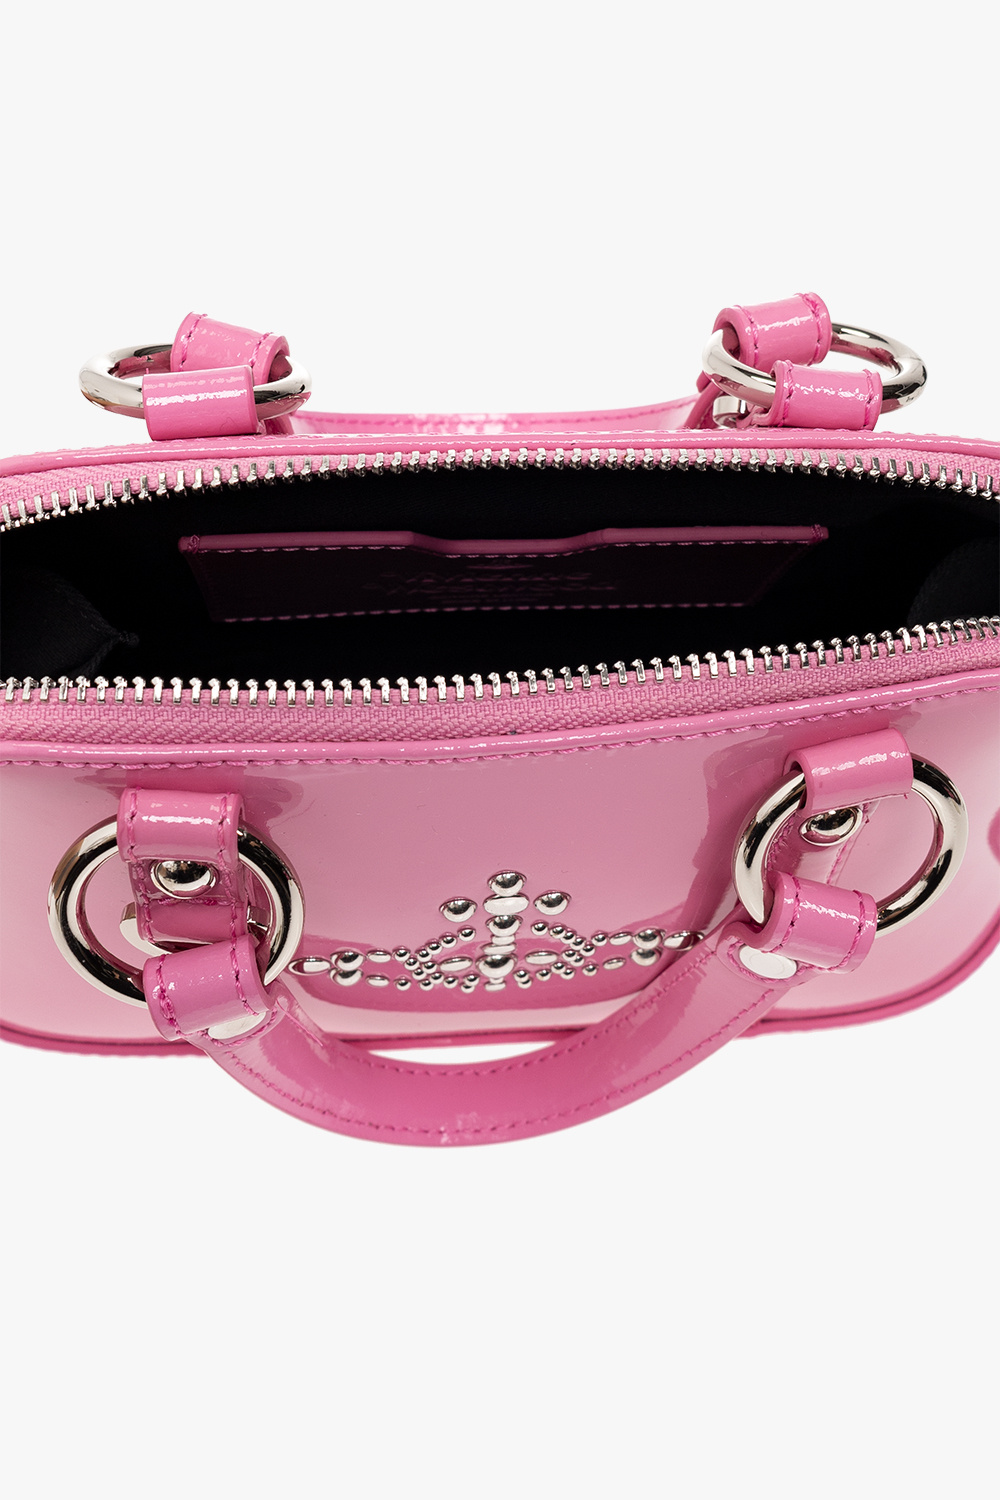 Vivienne Westwood Pink Louise Heart Bag - G406 Pink